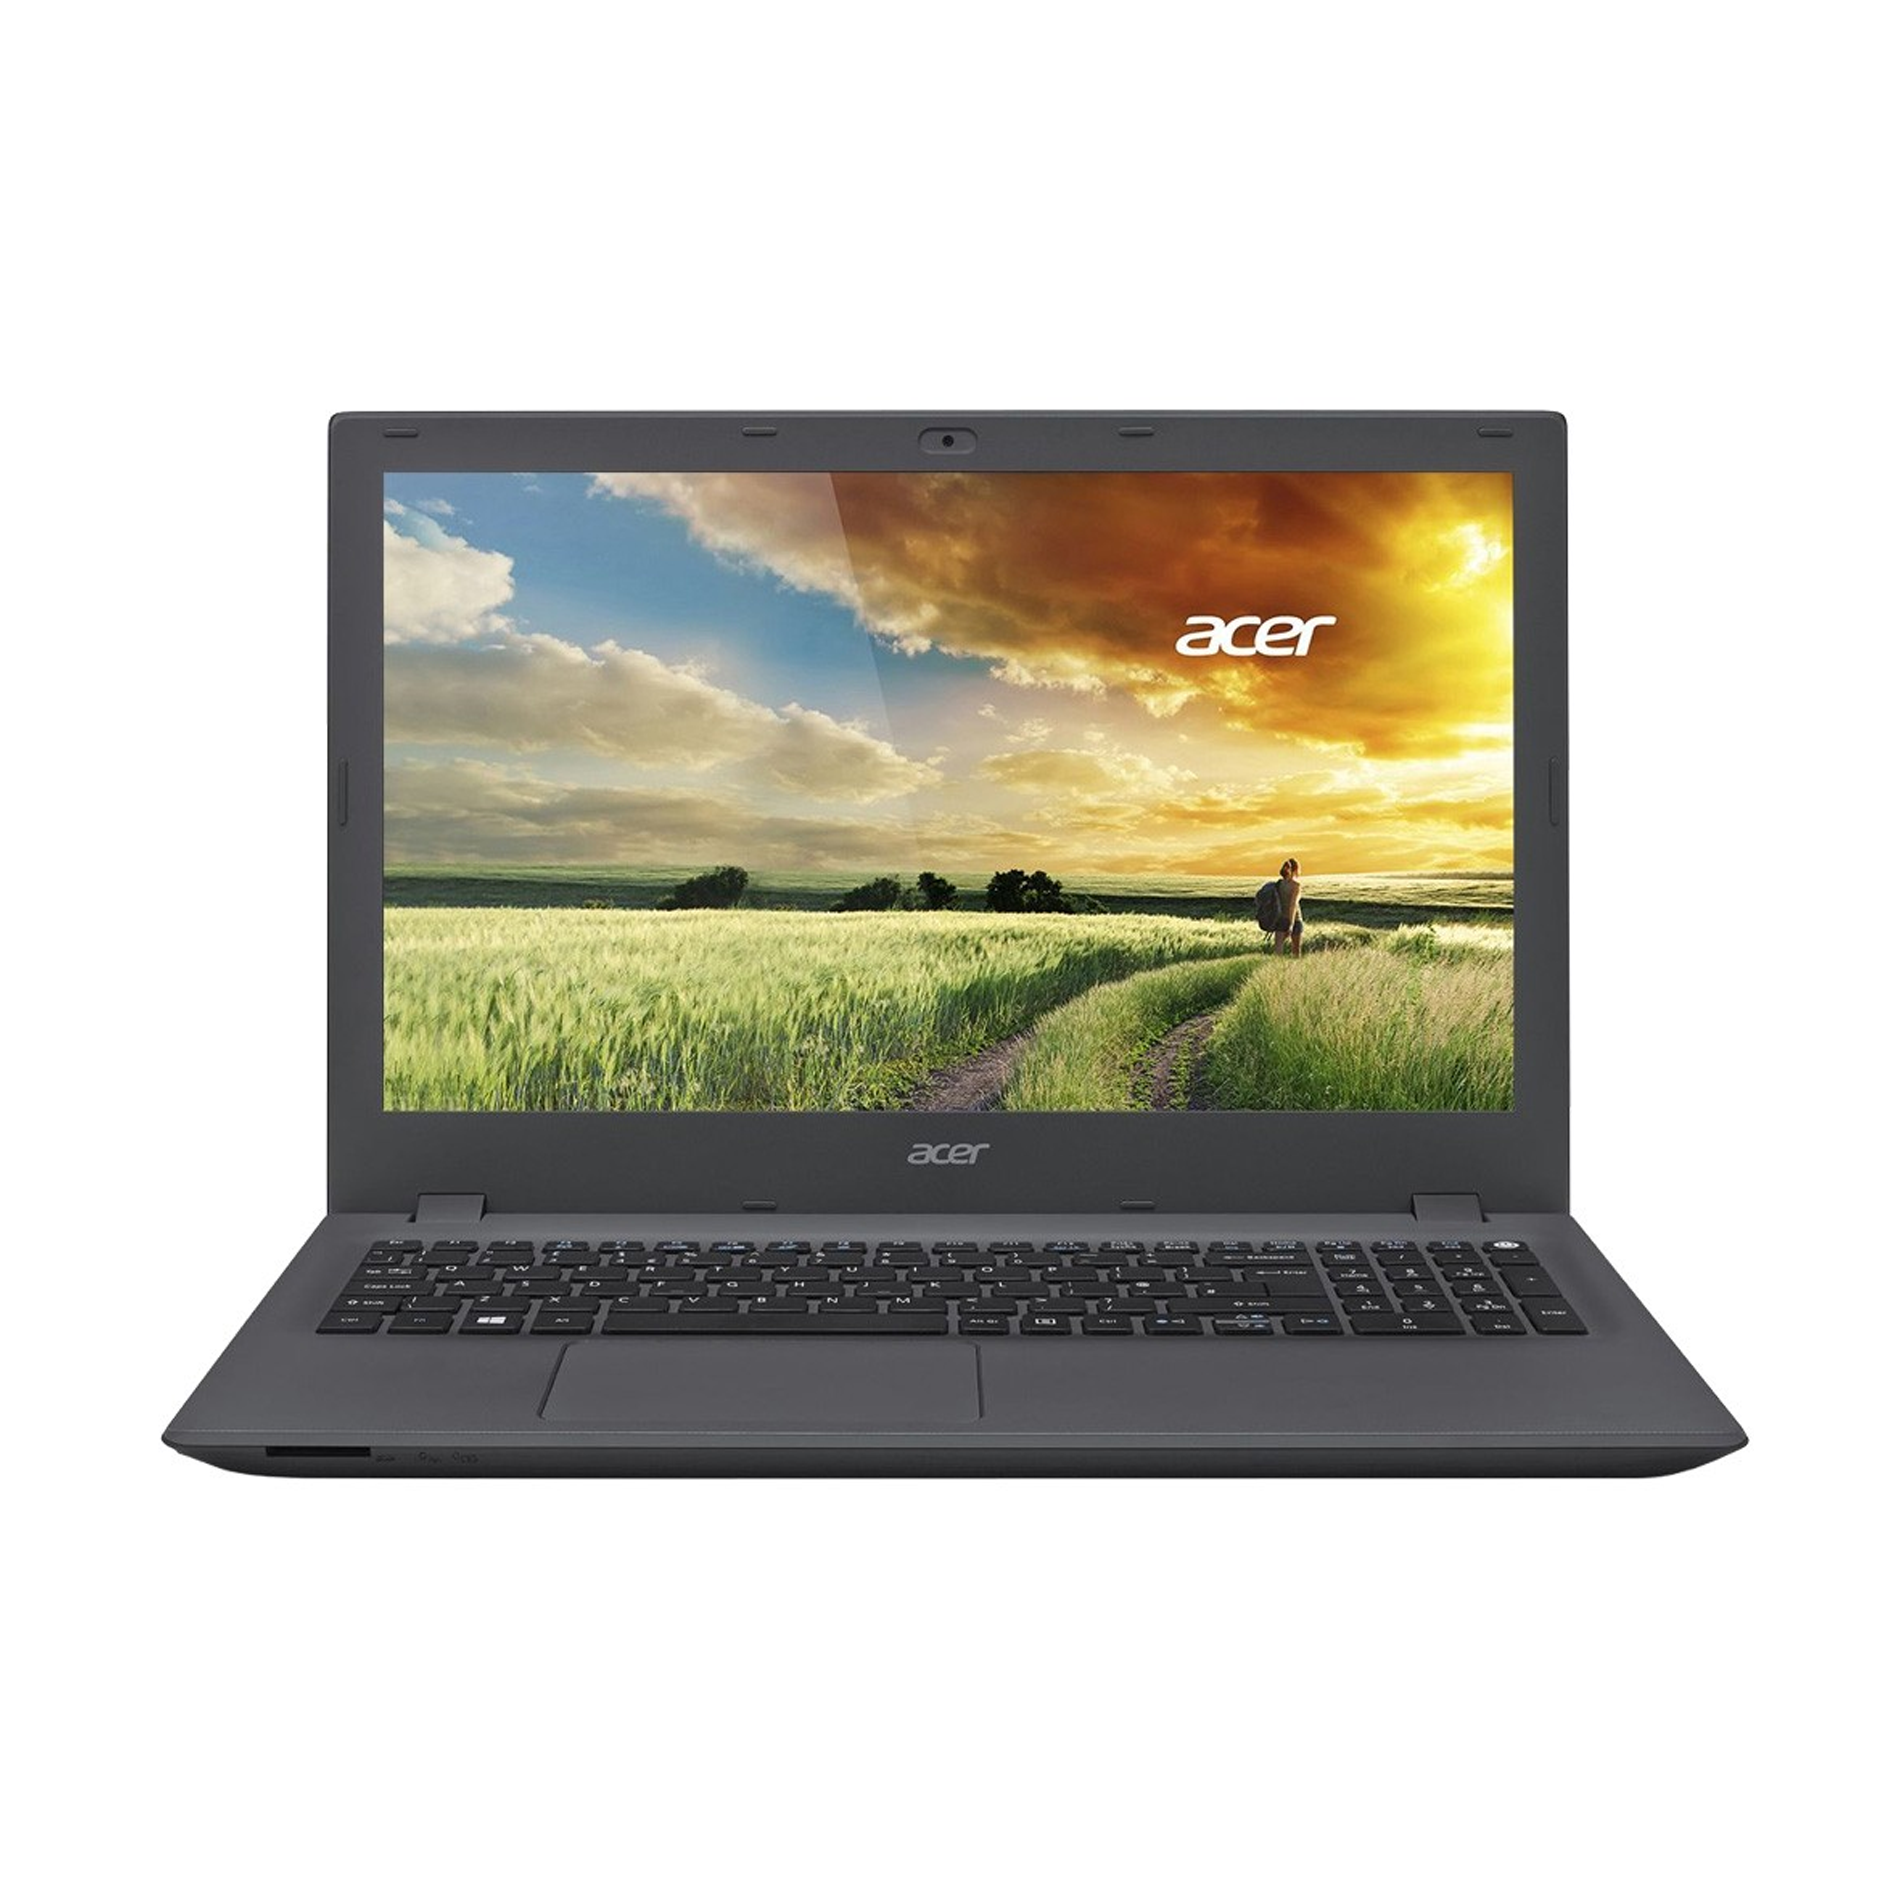 Máy tính xách tay Acer E5-574G-59DA NX.G3BSV.001